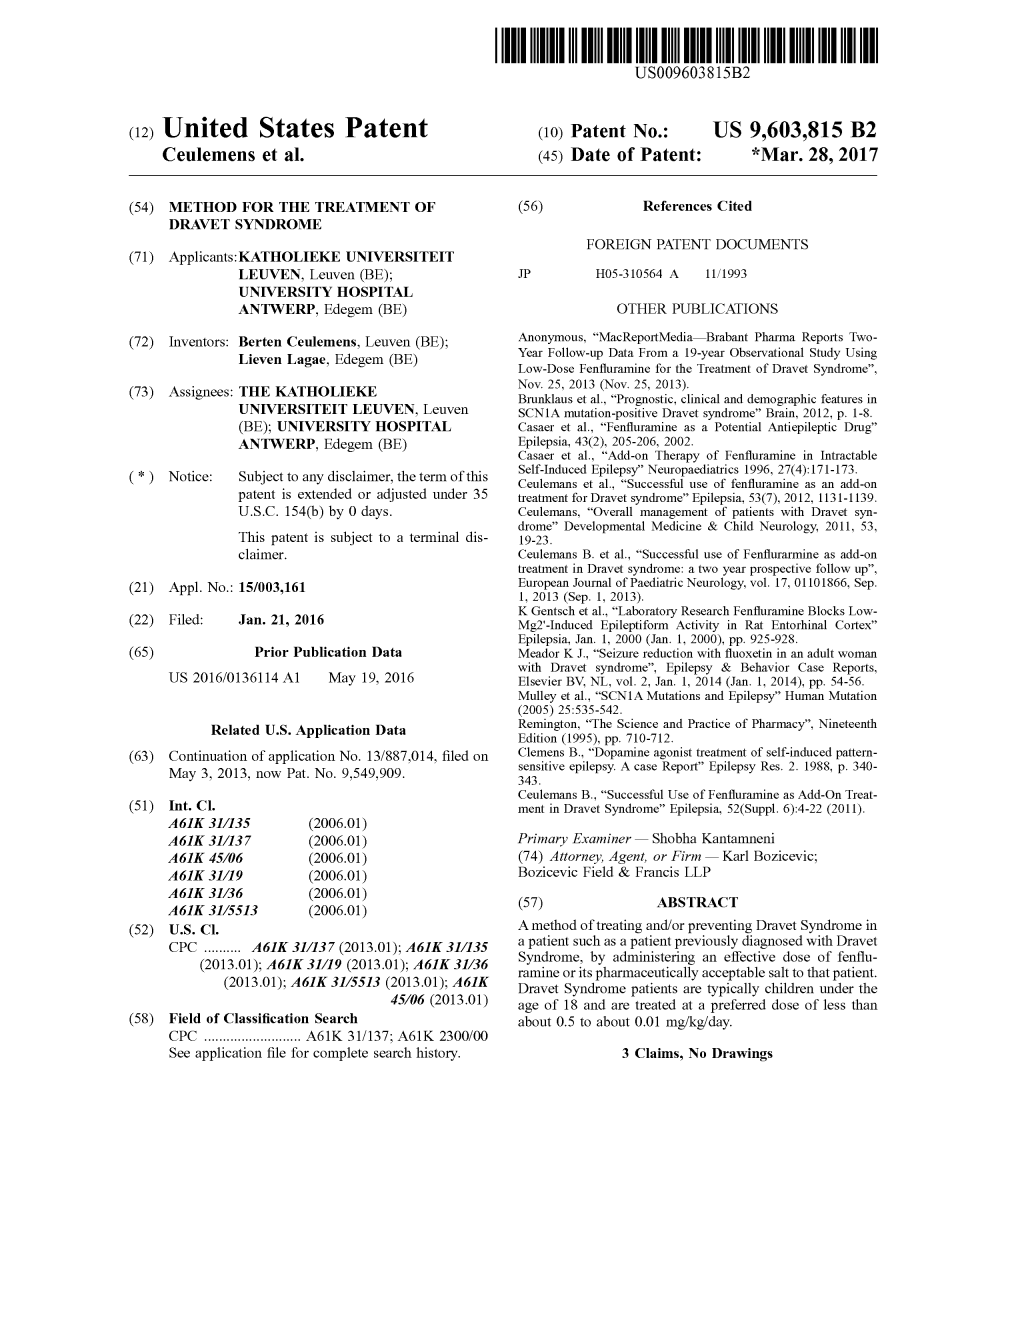 (12) United States Patent (10) Patent No.: US 9,603,815 B2 Ceulemens Et Al